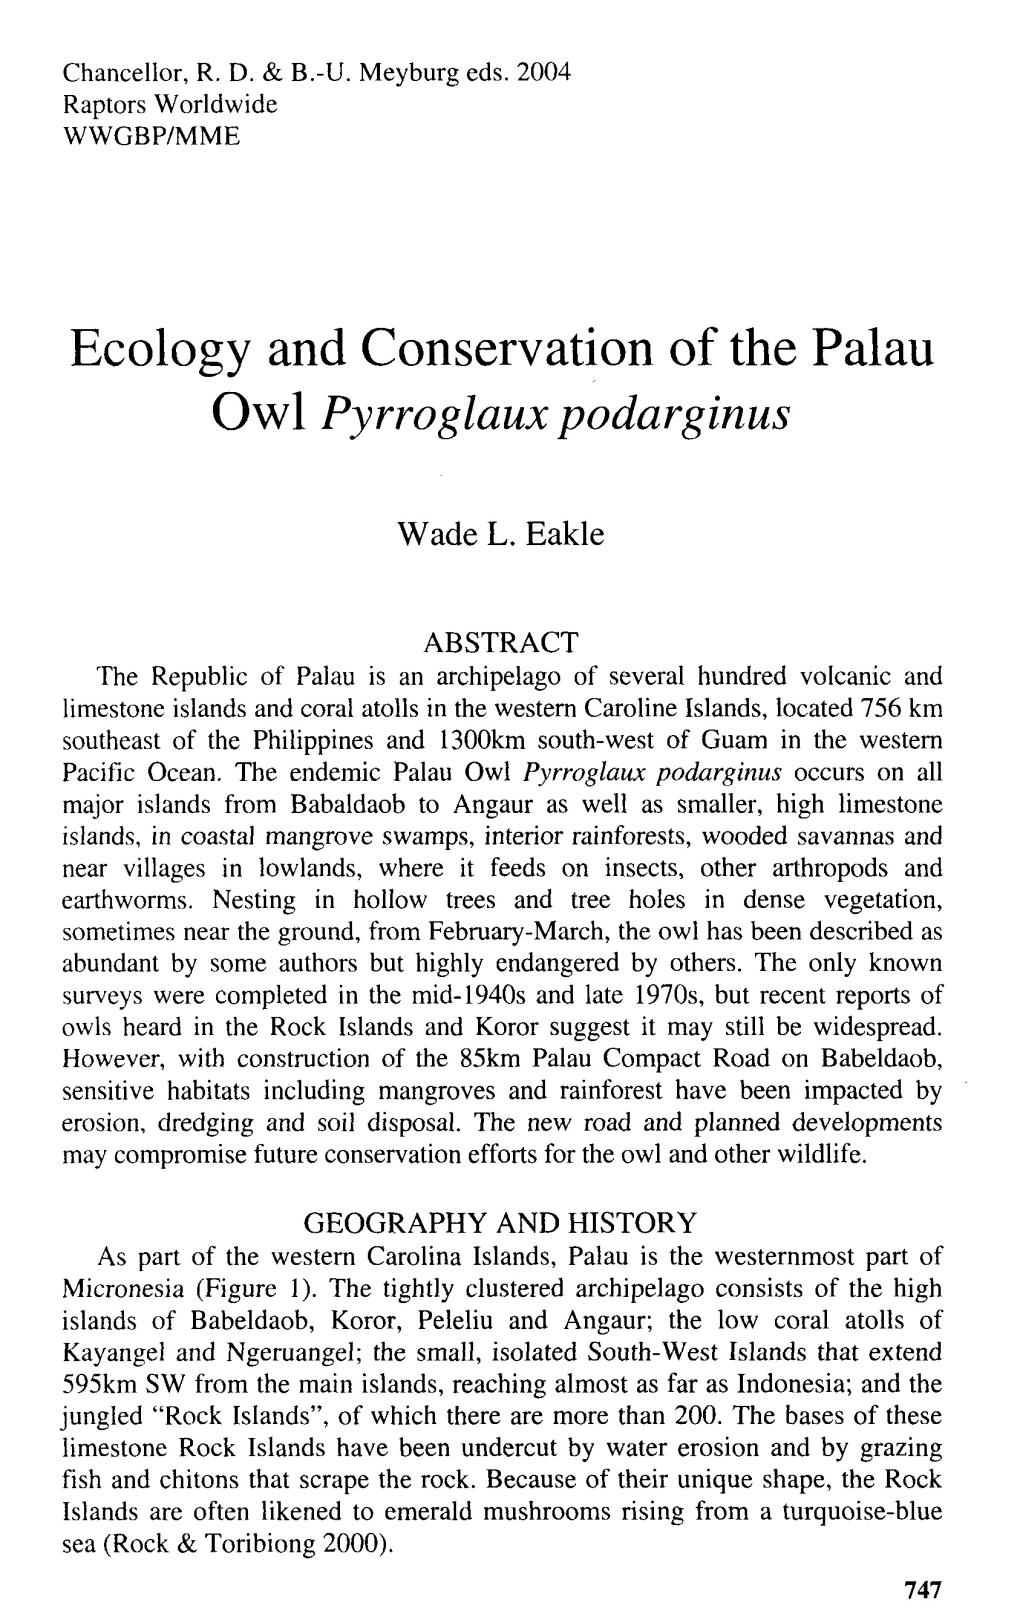 Ecology and Conservation of the Palau Owl Pyrroglaux Podarginus